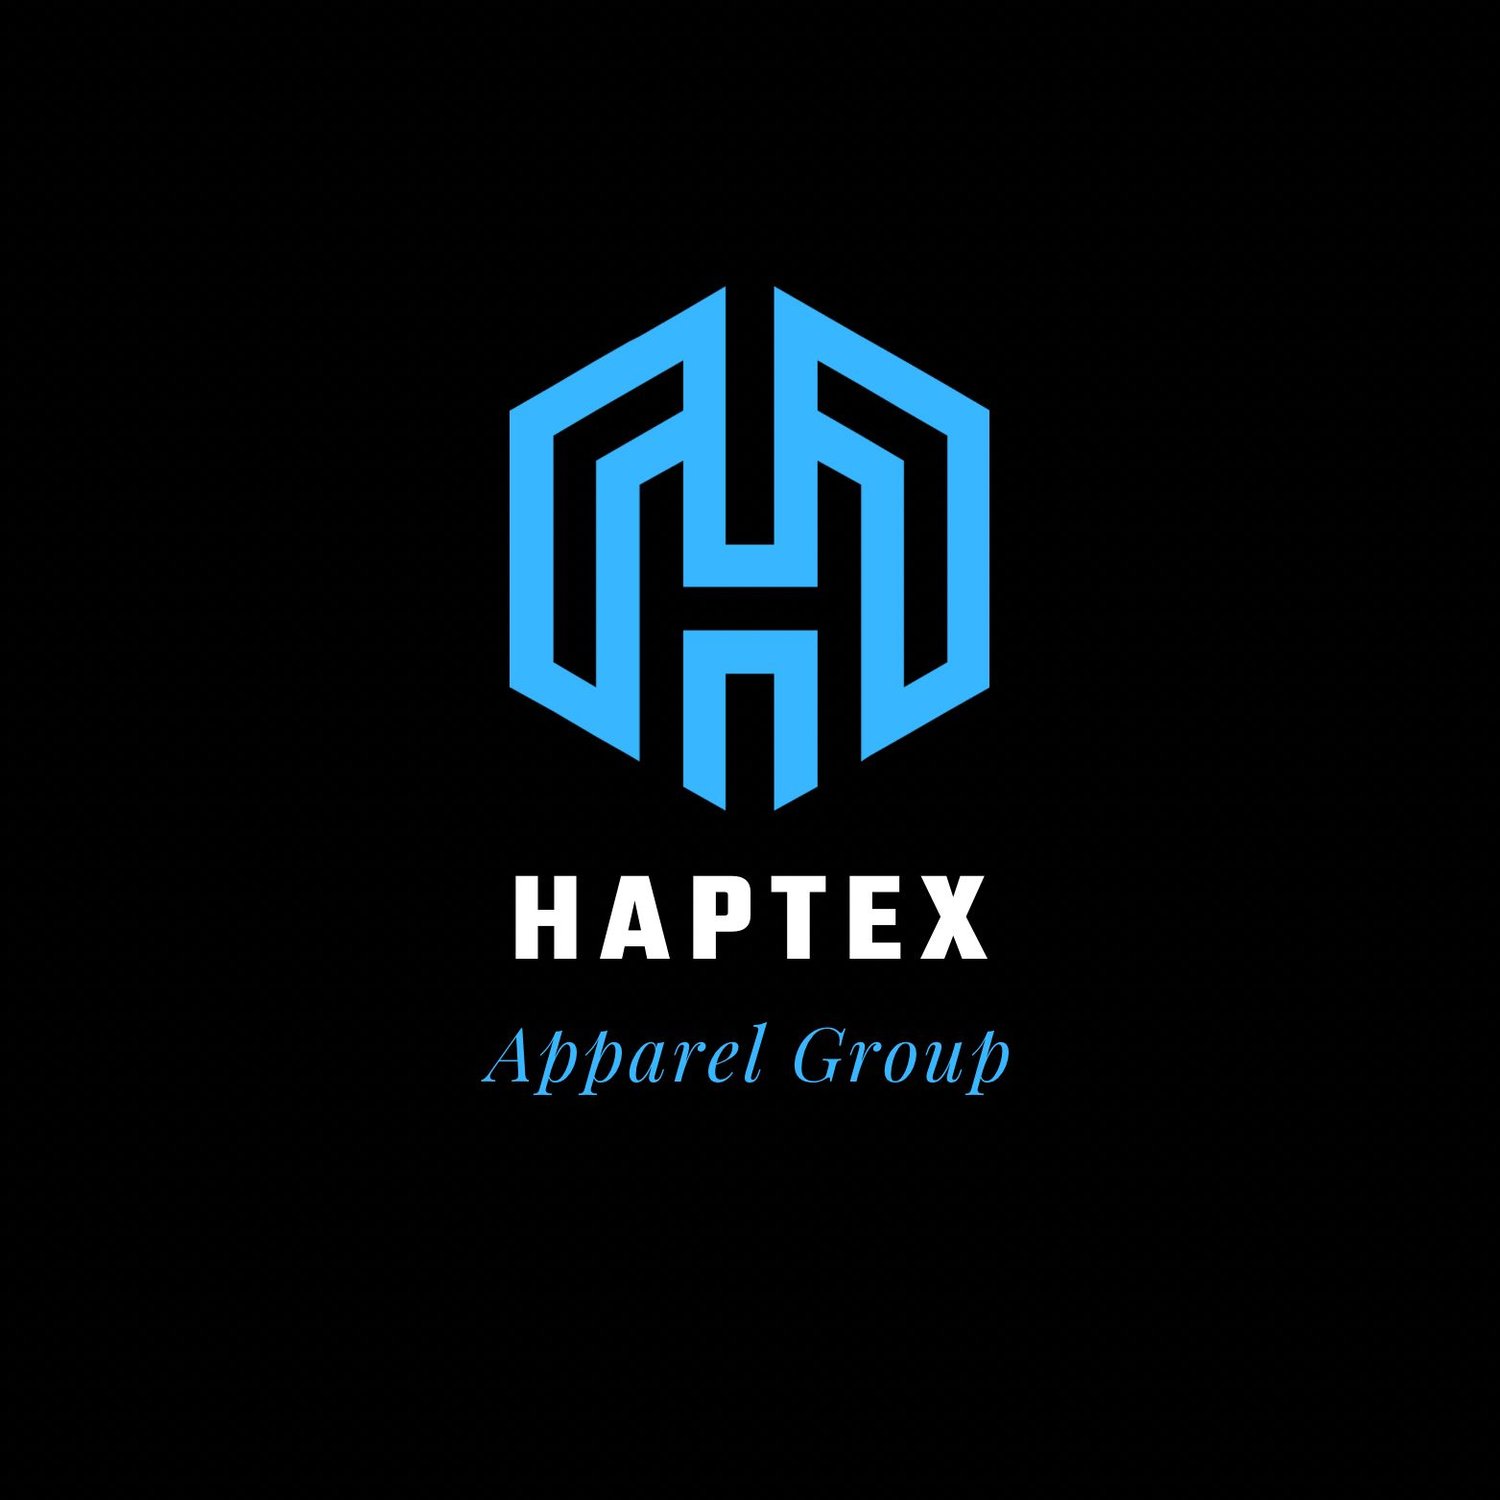 Haptex Apparel